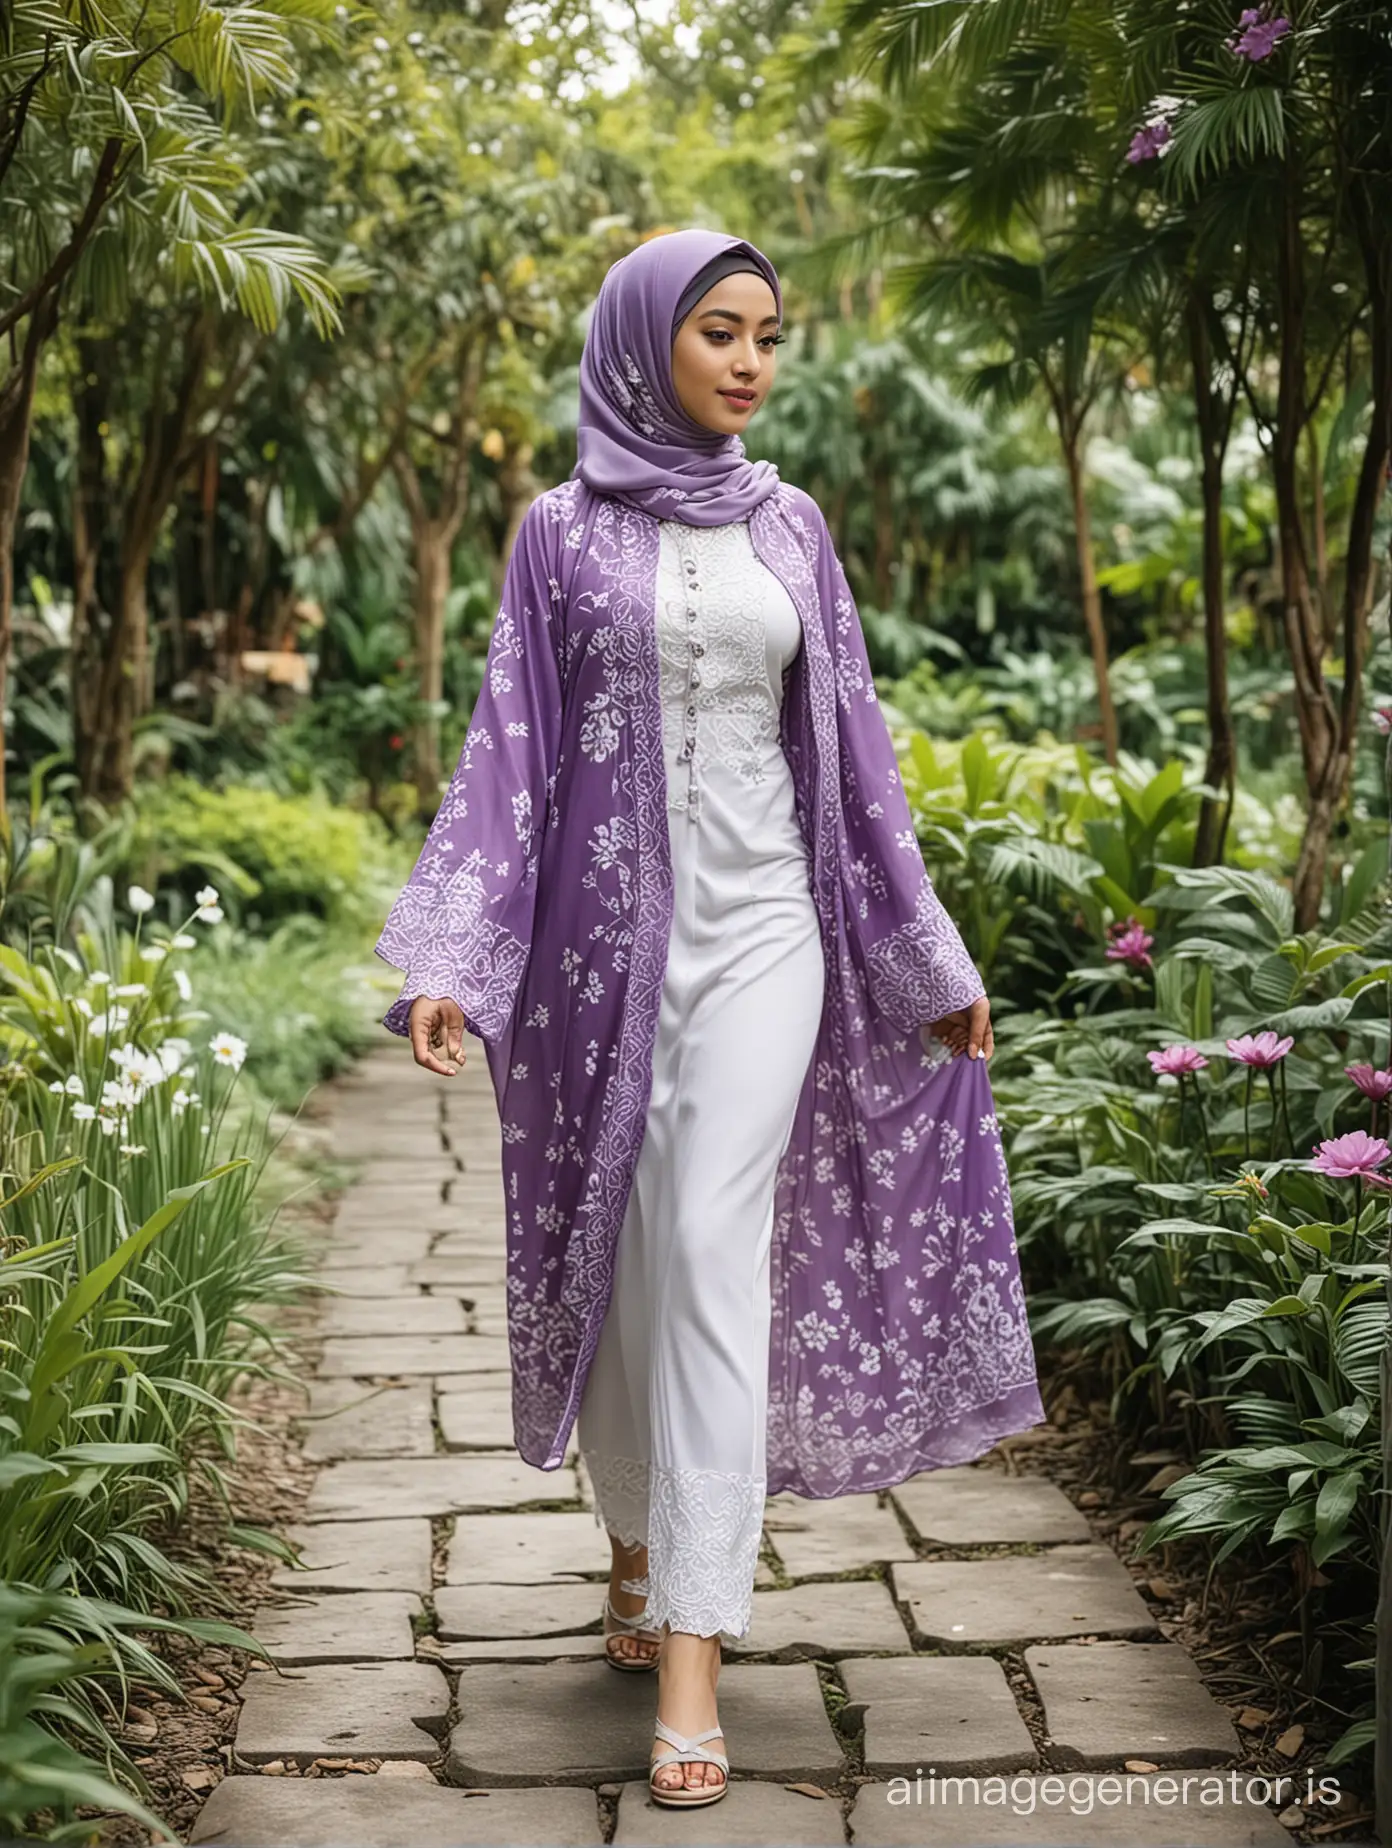 A beautiful hijab girl wearing a purple and white kebaya is walking in a beautiful garden